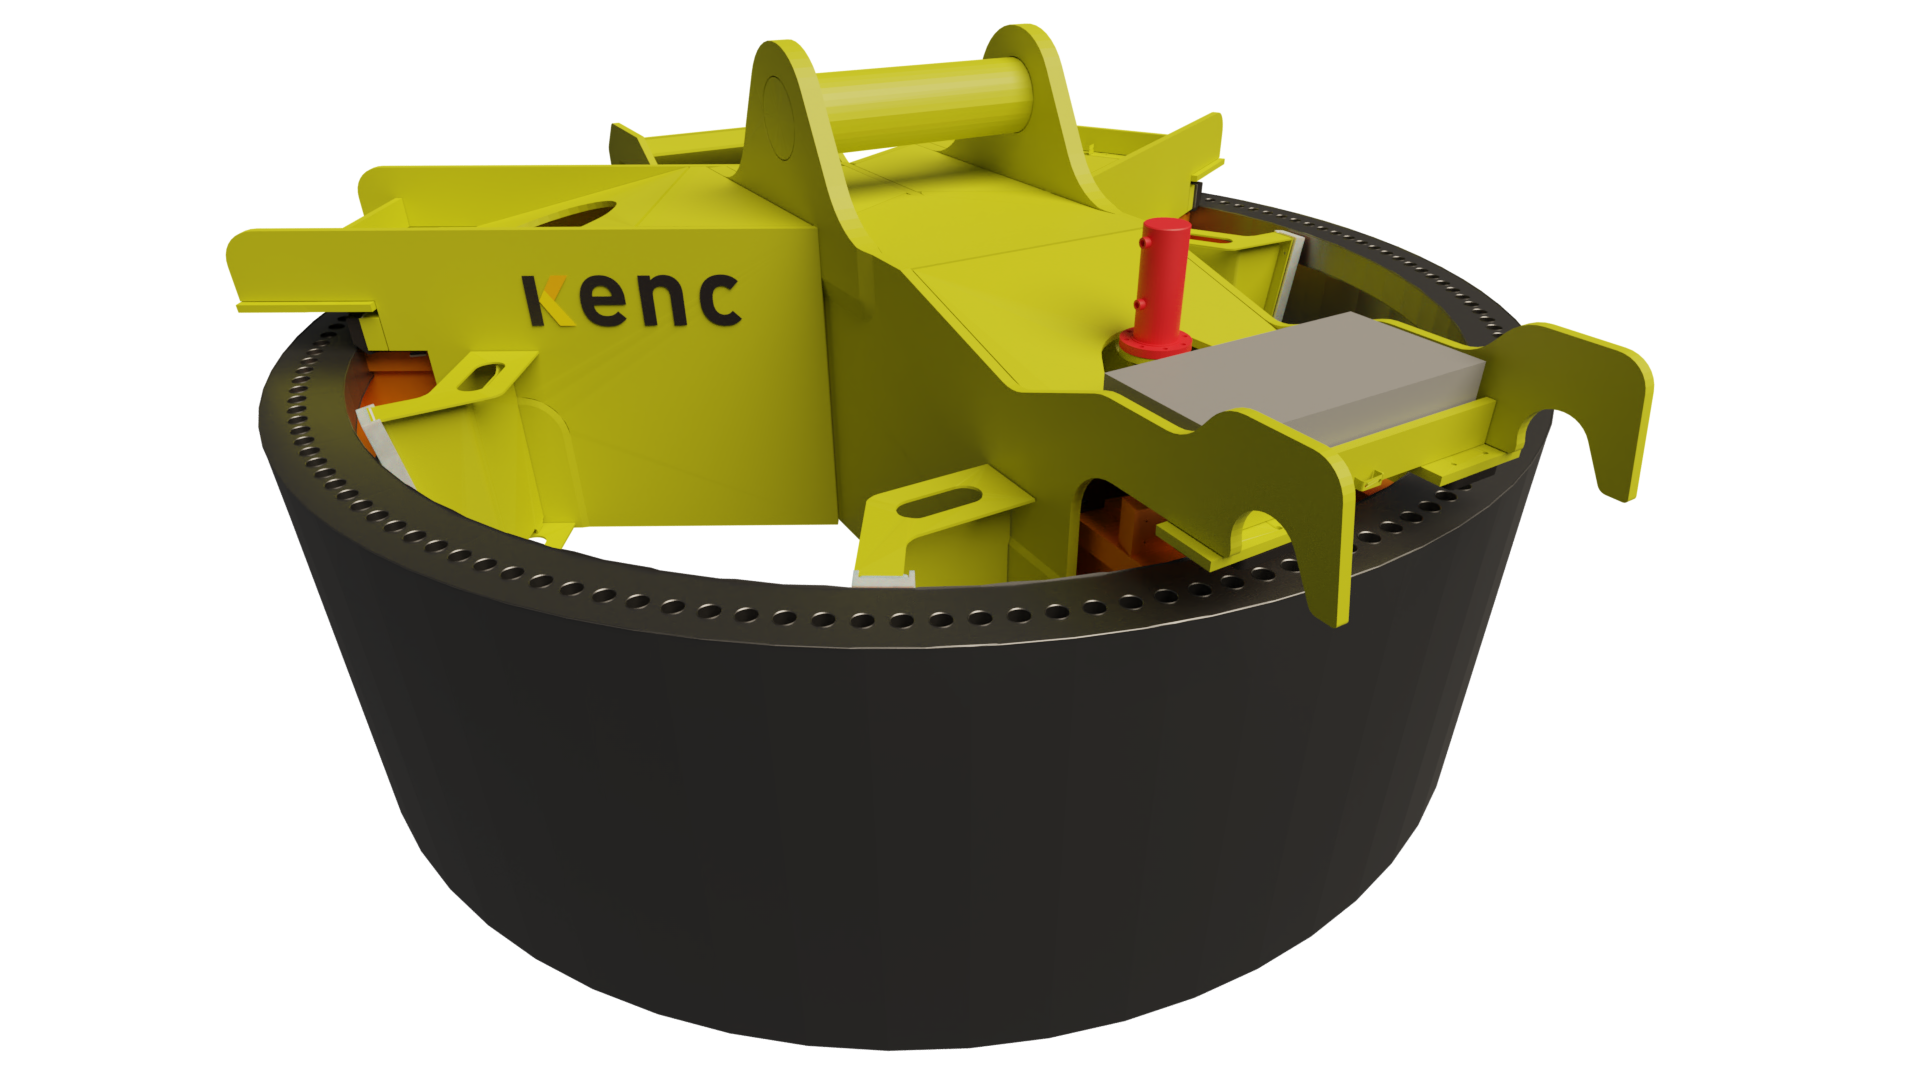 KENC: Fabrication starts on Van Oord’s flange monopile upending tool